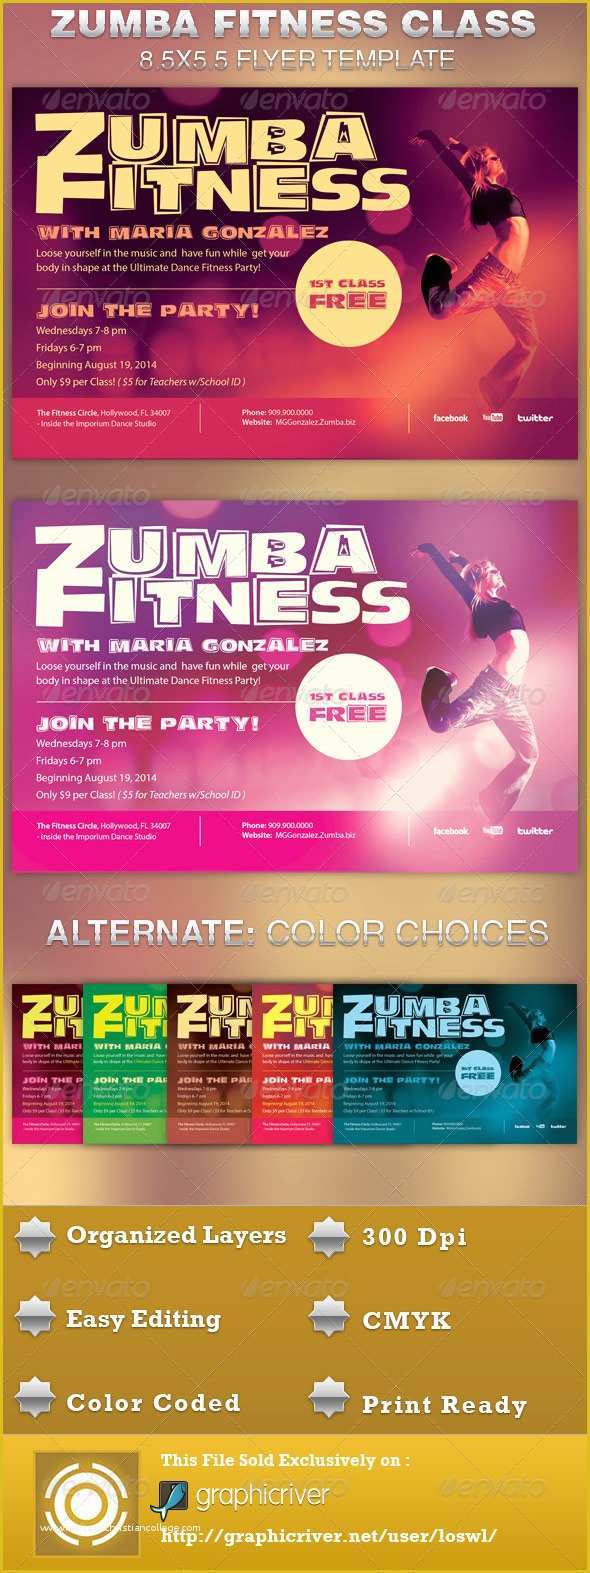 Free Art Class Flyer Template Of Zumba Fitness Class Flyer Template On Behance